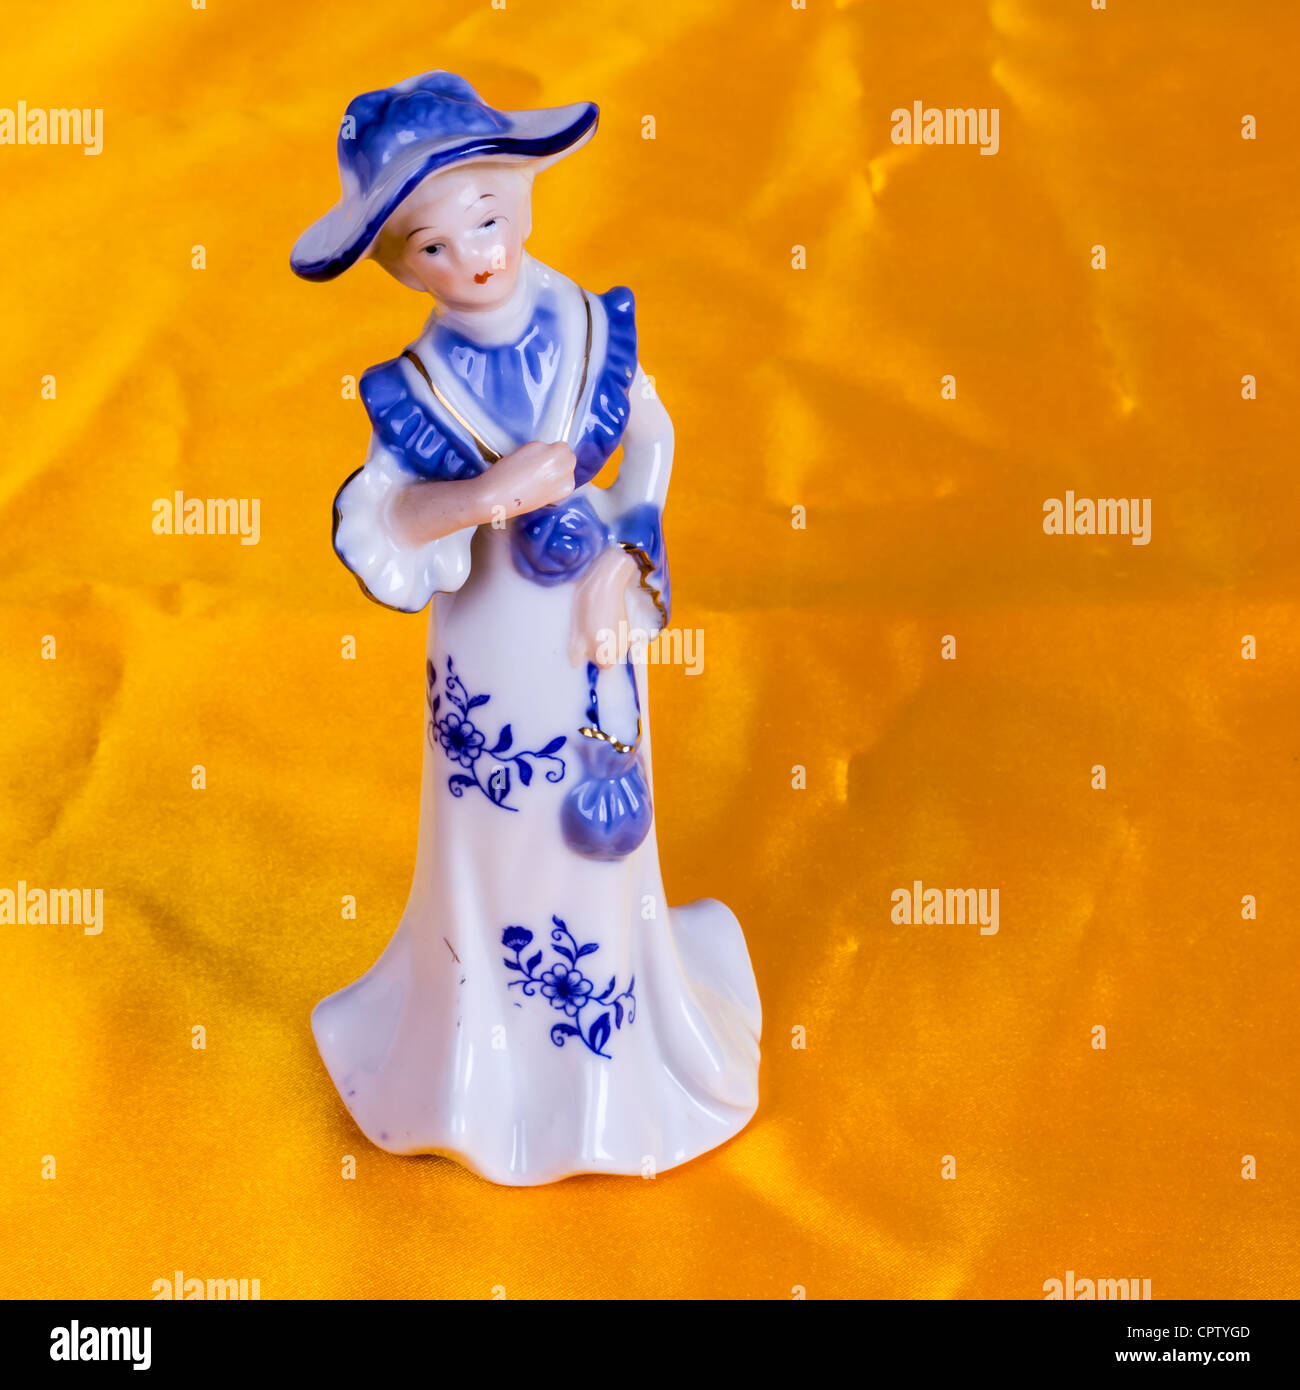 Porcelain figurine, Old Lady Stock Photo